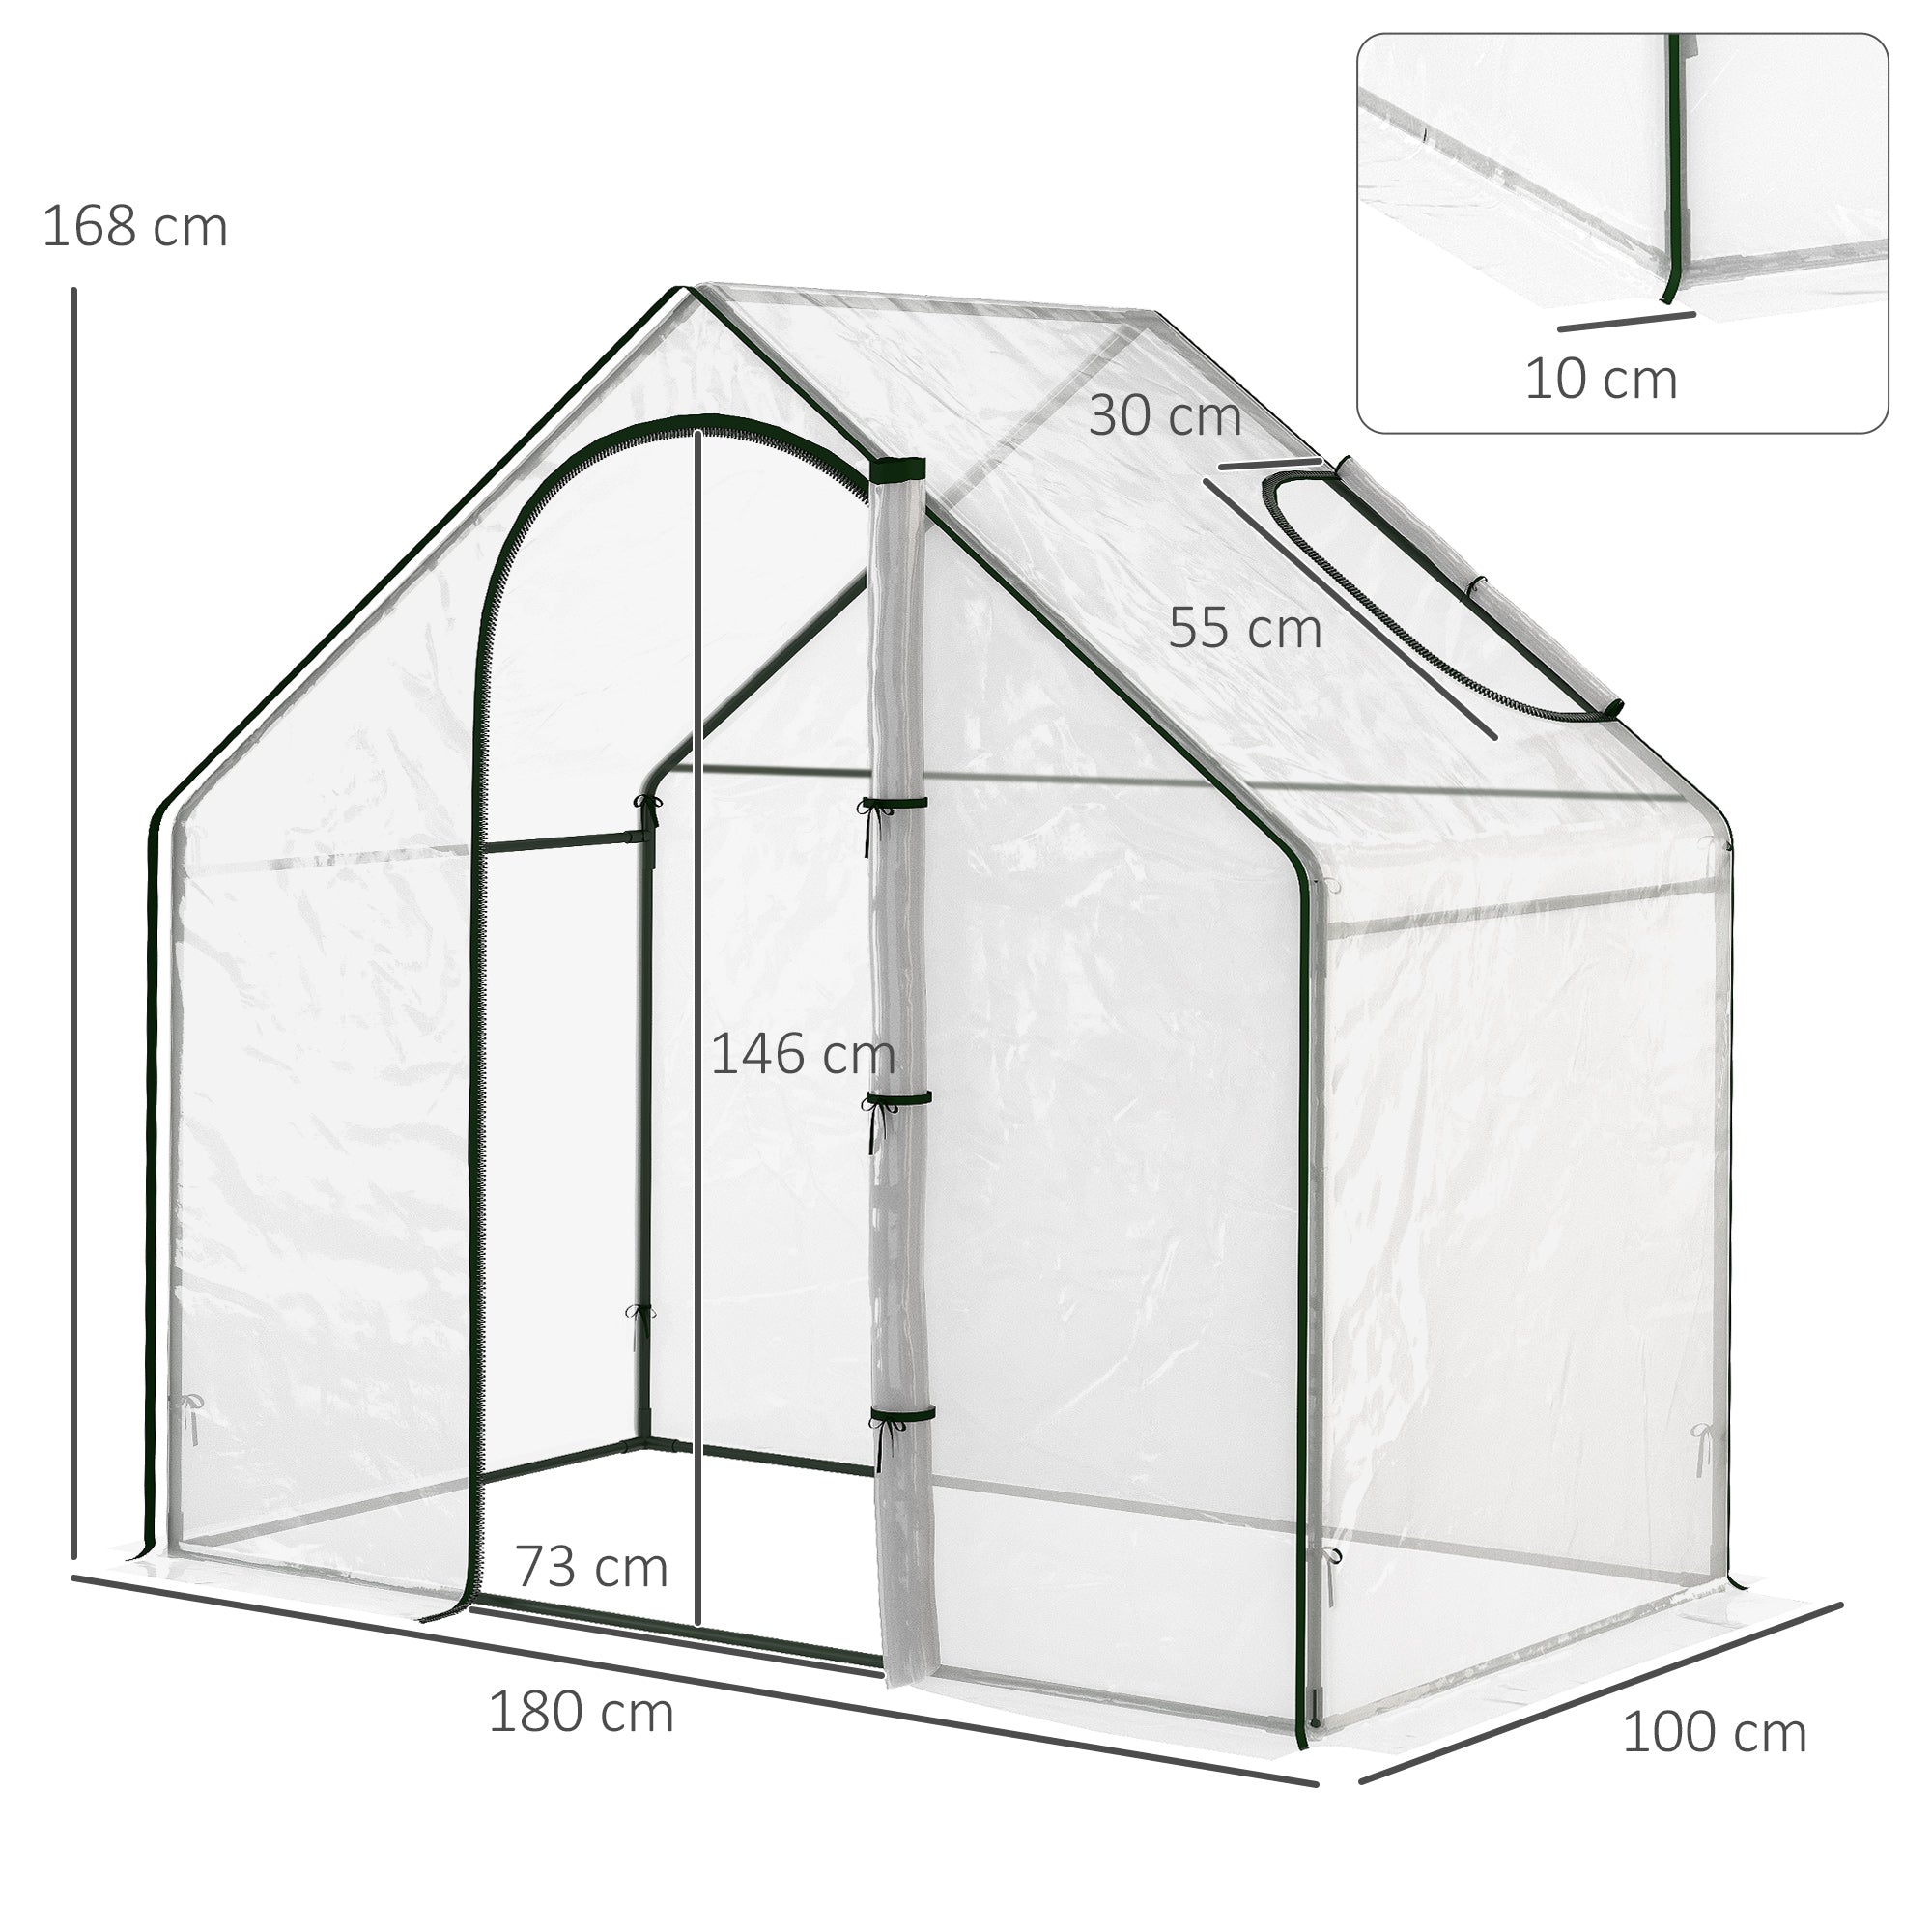 Walk In PVC Greenhouse Garden Outdoor Flower Planter Steel Frame w/ Zipped Door & Window 180 x 100 x 168CM White-2